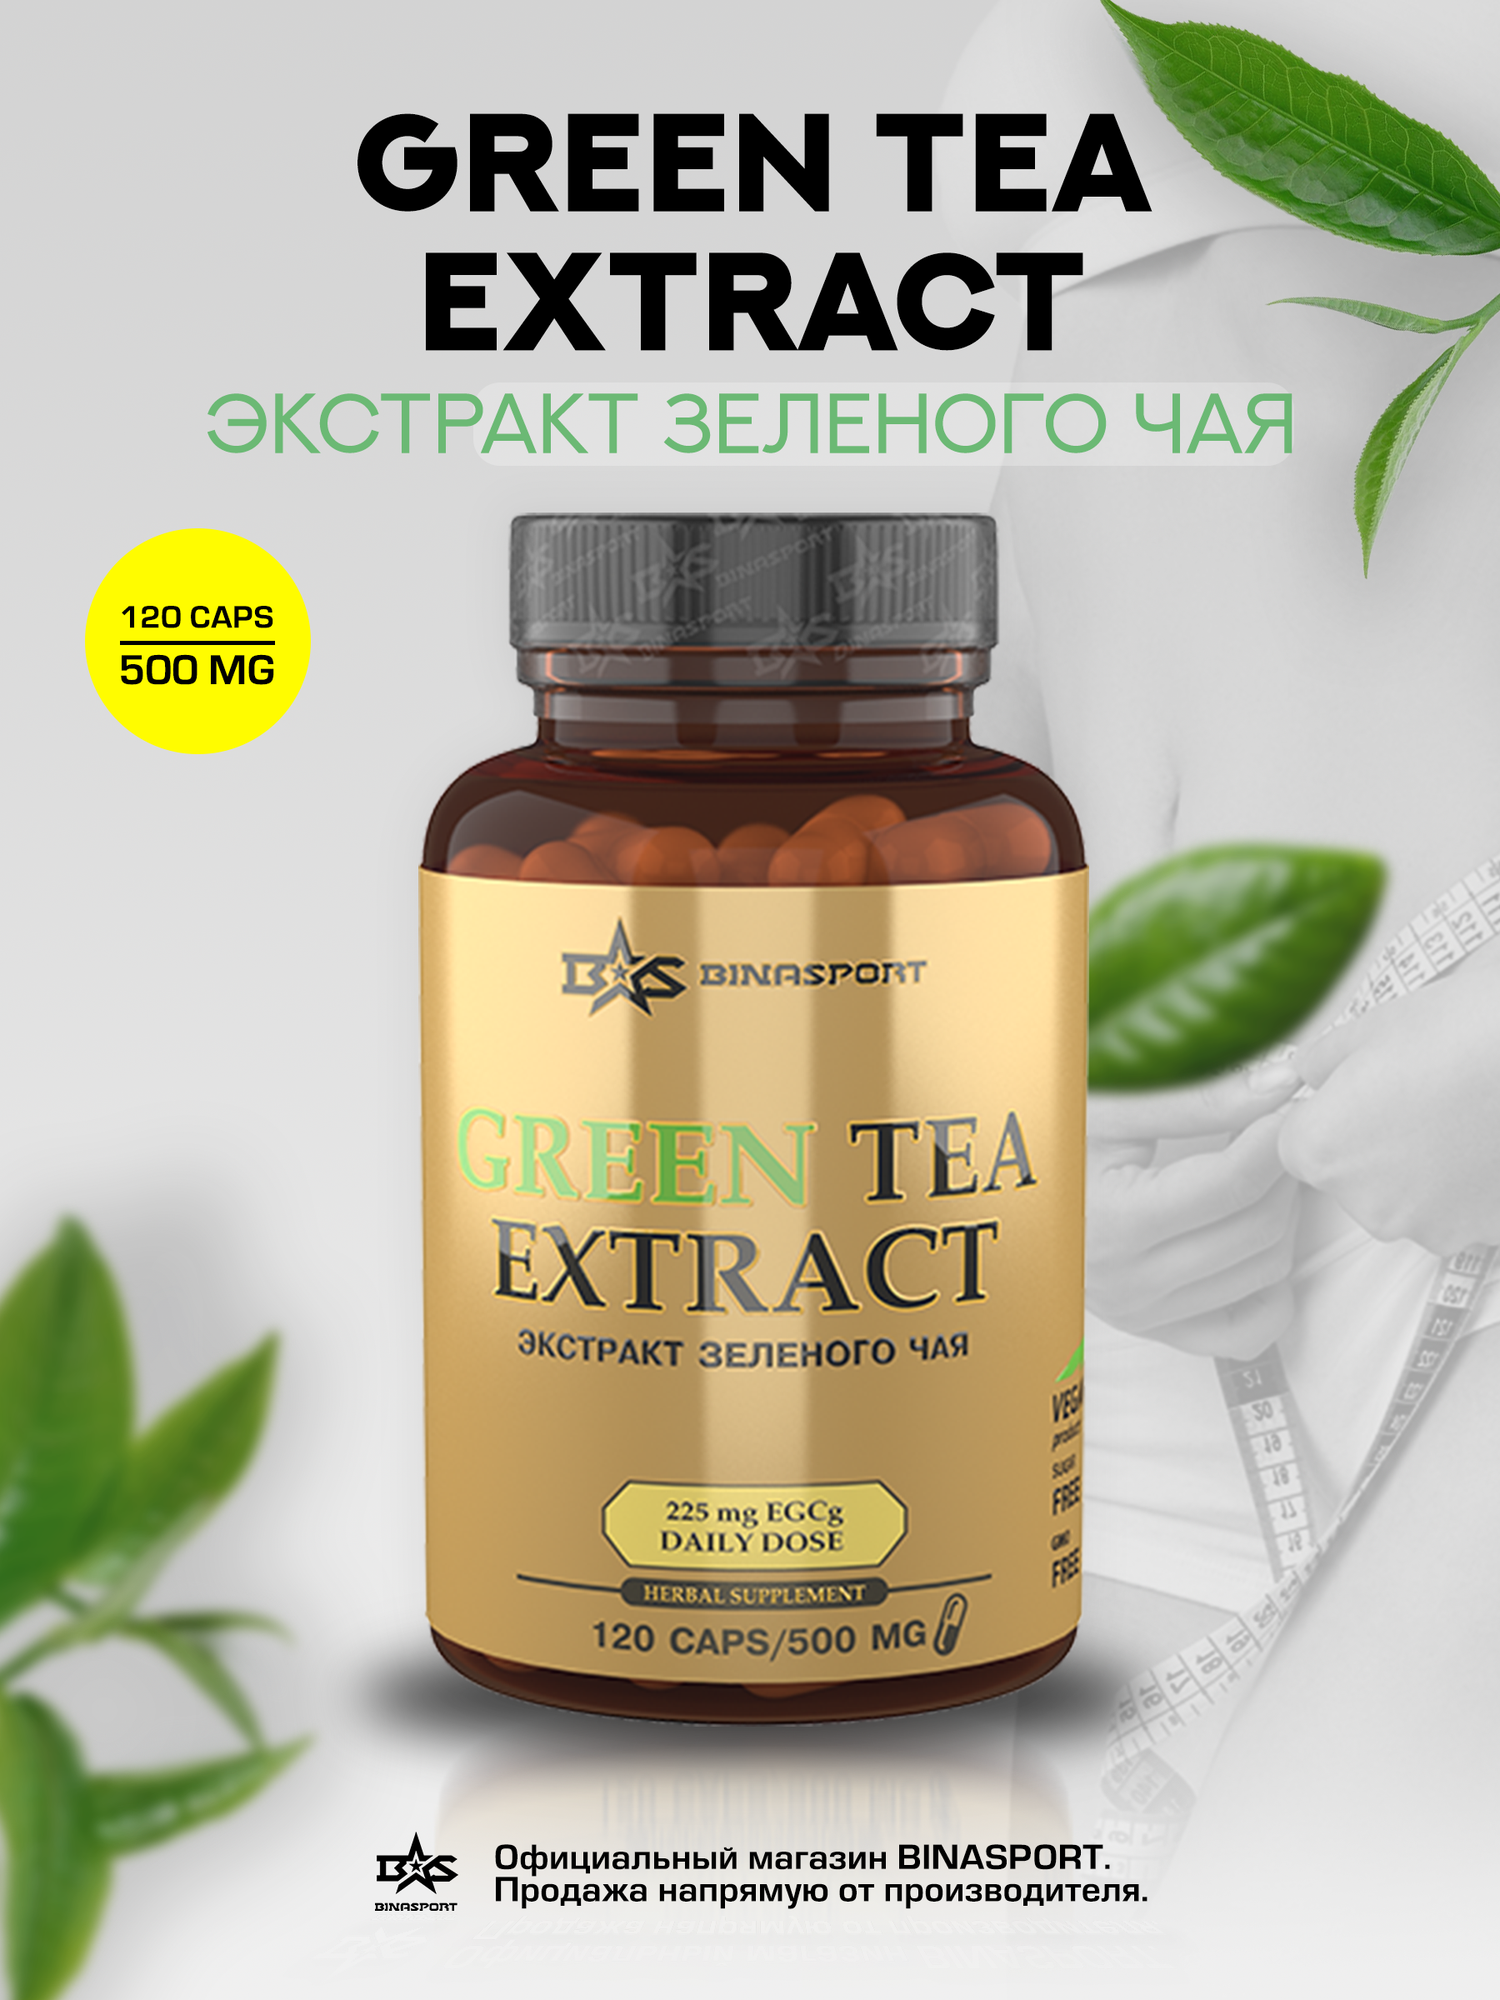 BINASPORT GREEN TEA EXTRACT (Экстракт зелёного чая) 120 caps/500 mg